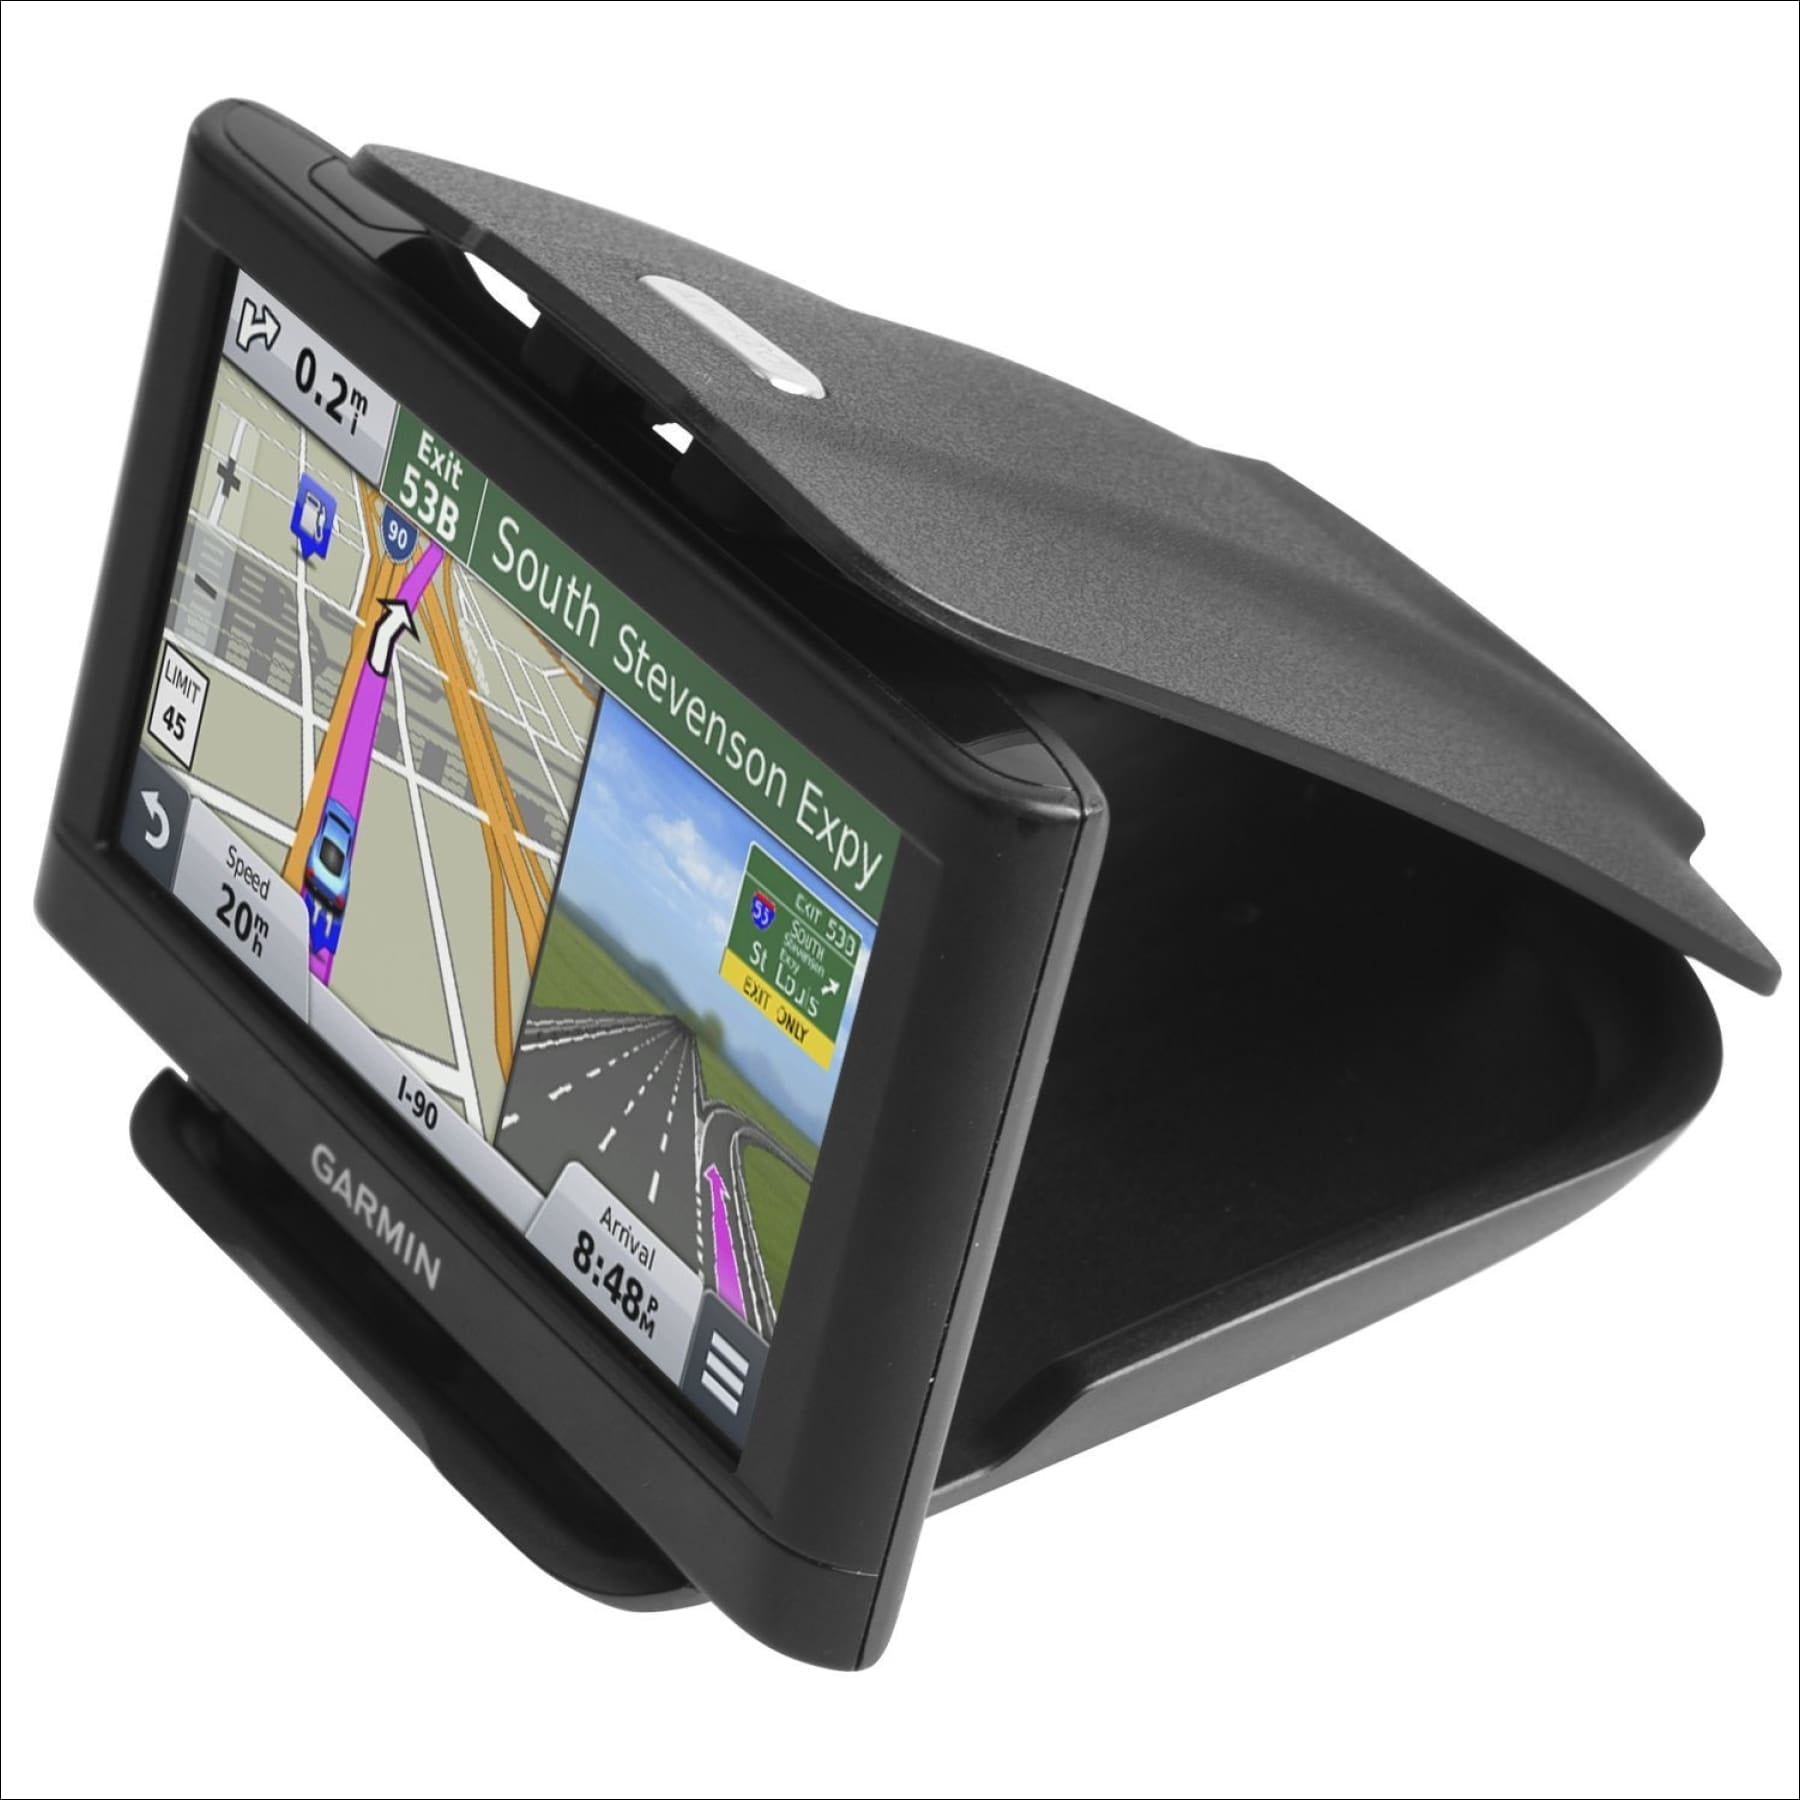 GPS Dash Mount Garmin Nuvi Tomtom Universal Navigation Bean Bag Dashboard Holder 